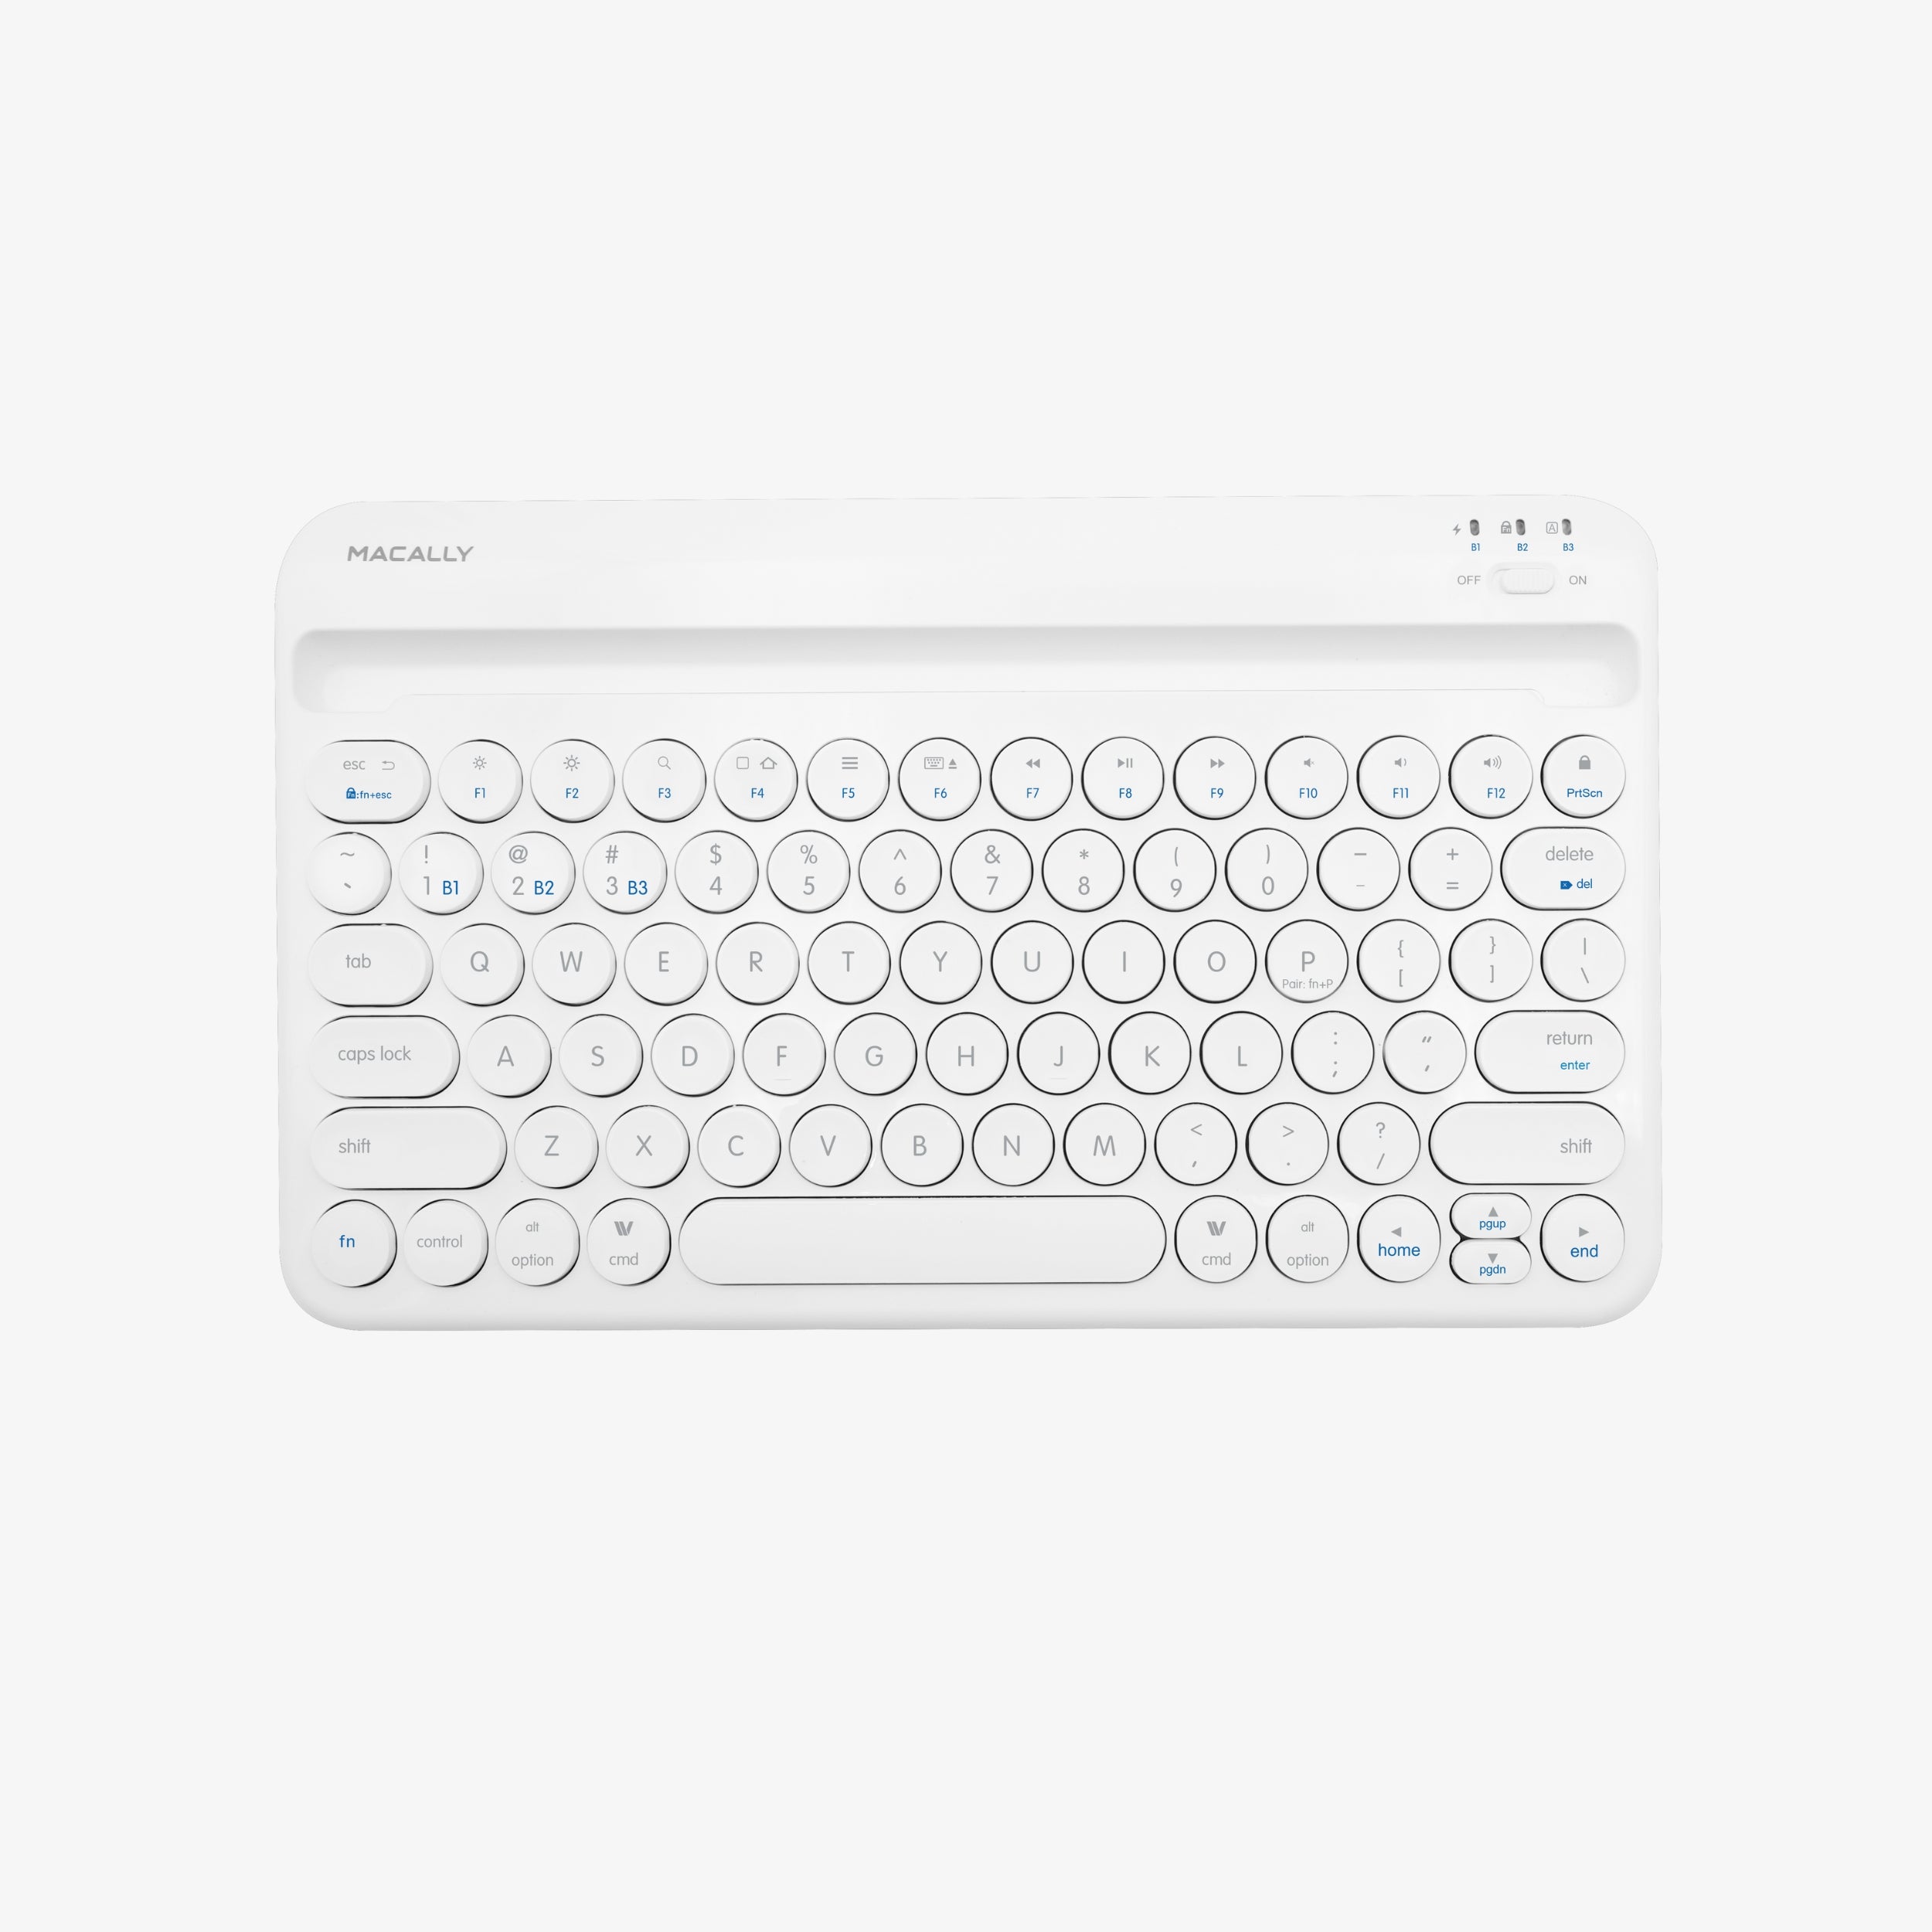 Bluetooth Keyboard For iPad, Mac, iPhone etc